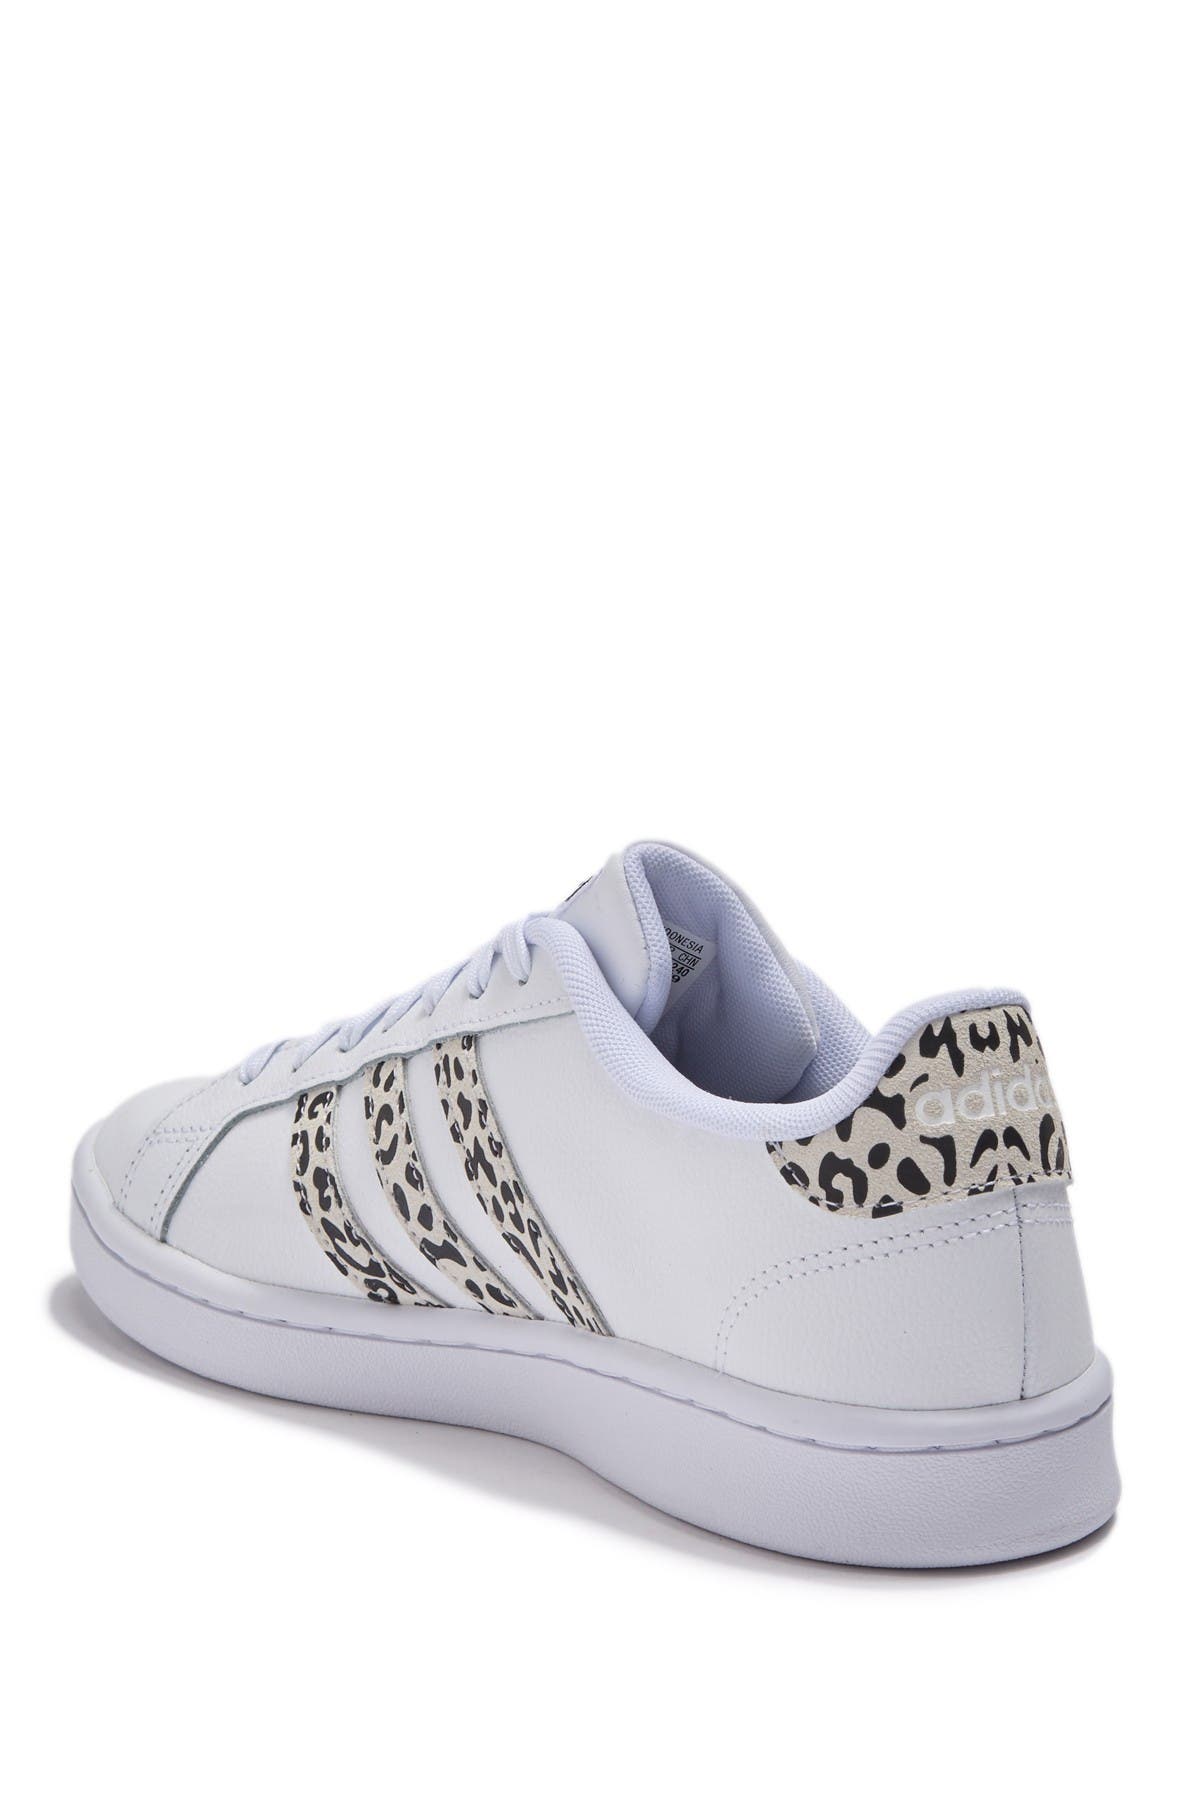 adidas leopard print sneakers canada